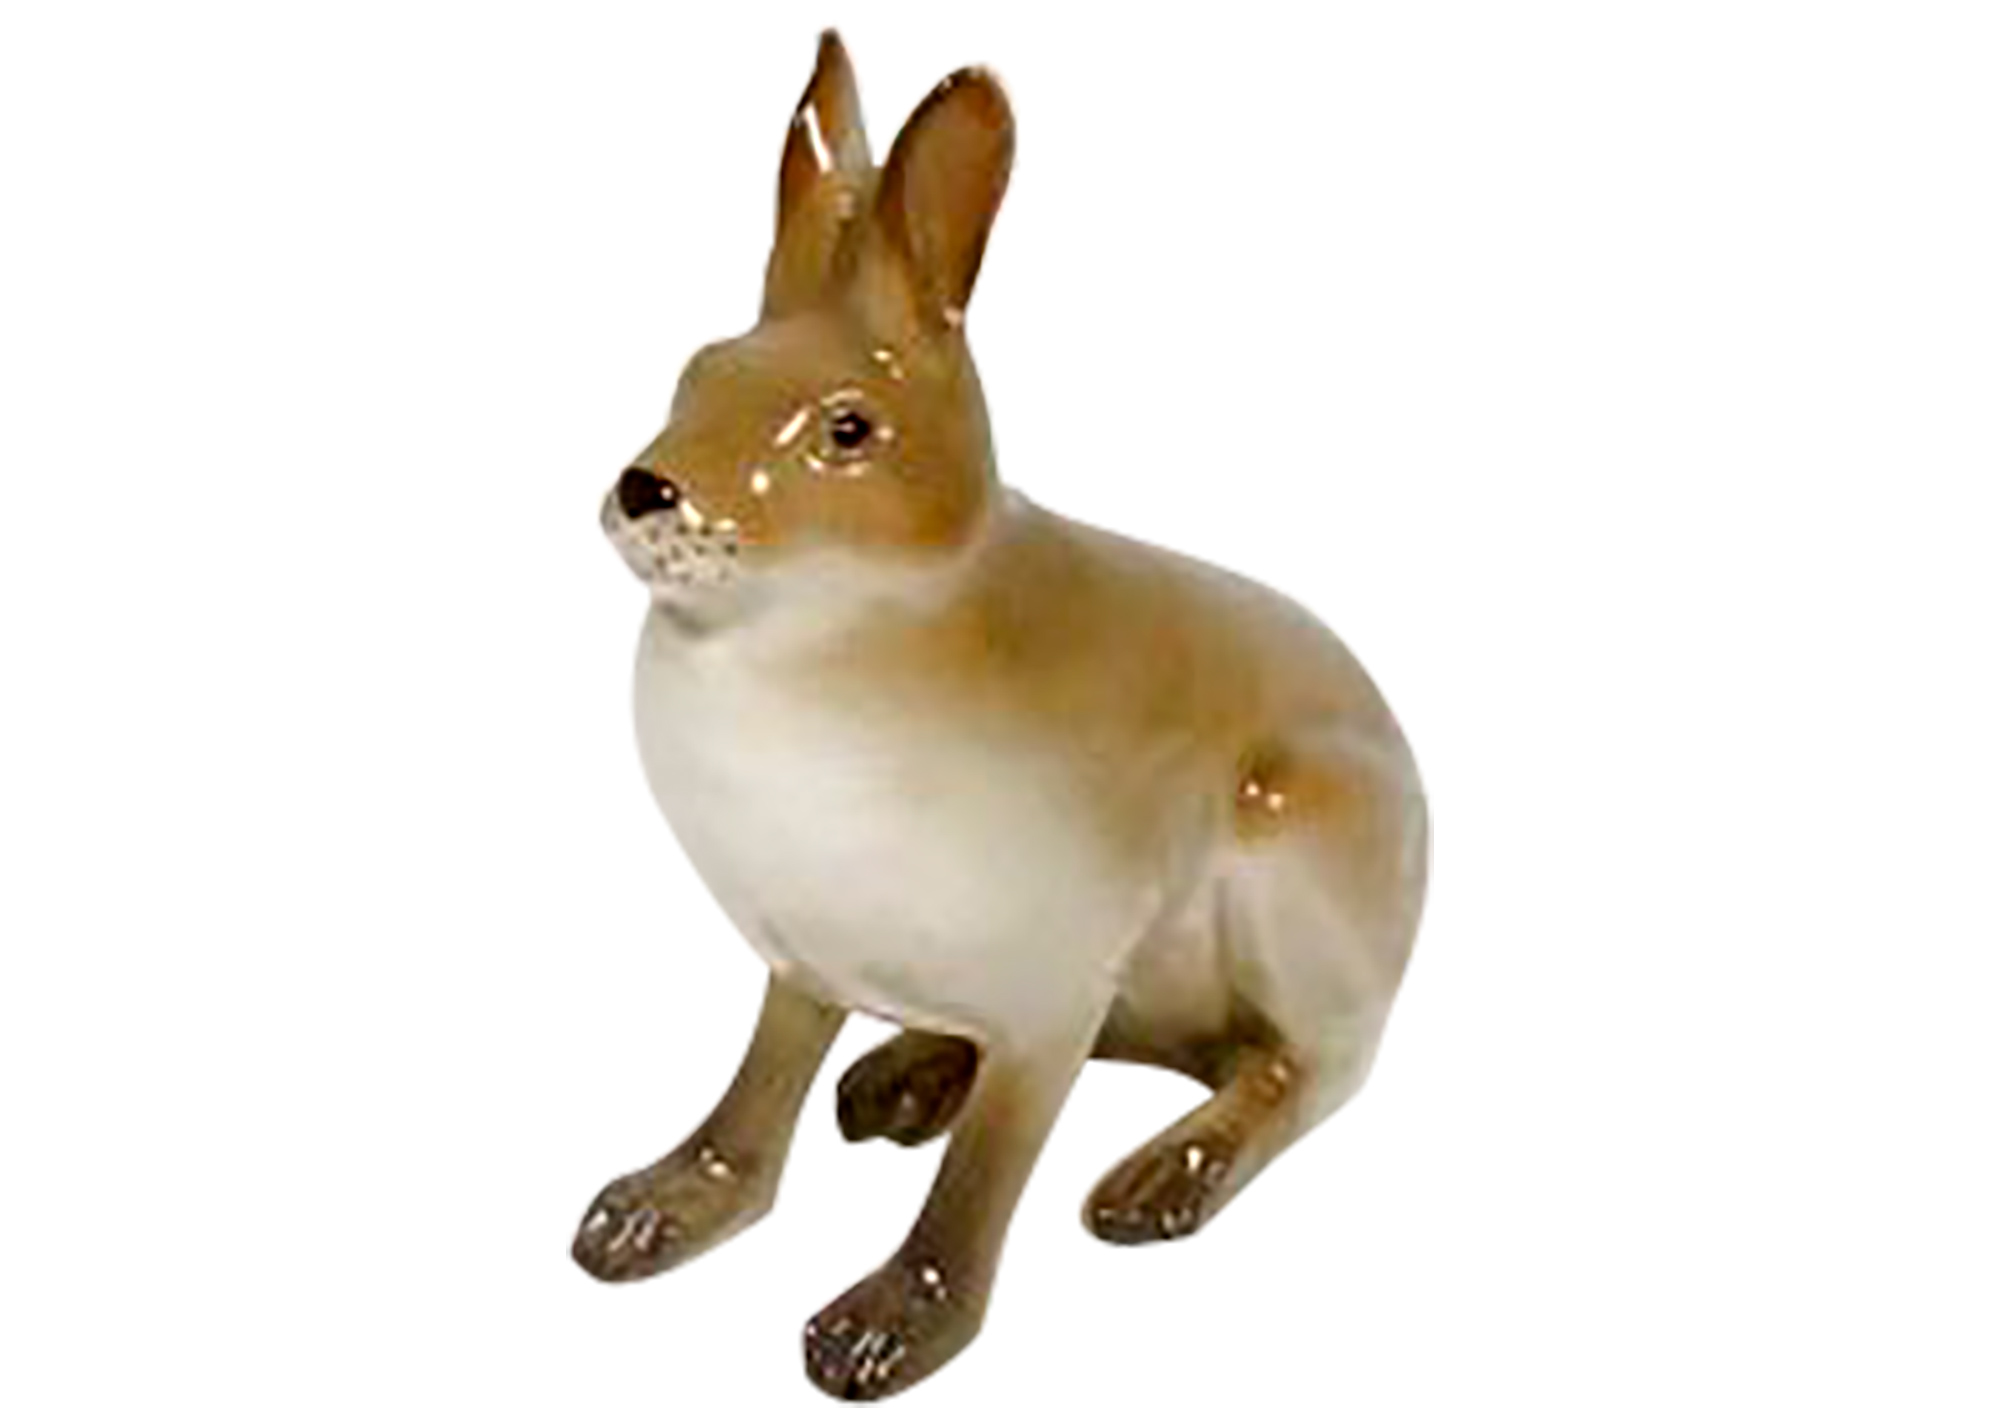 Buy Wild Hare Figurine at GoldenCockerel.com